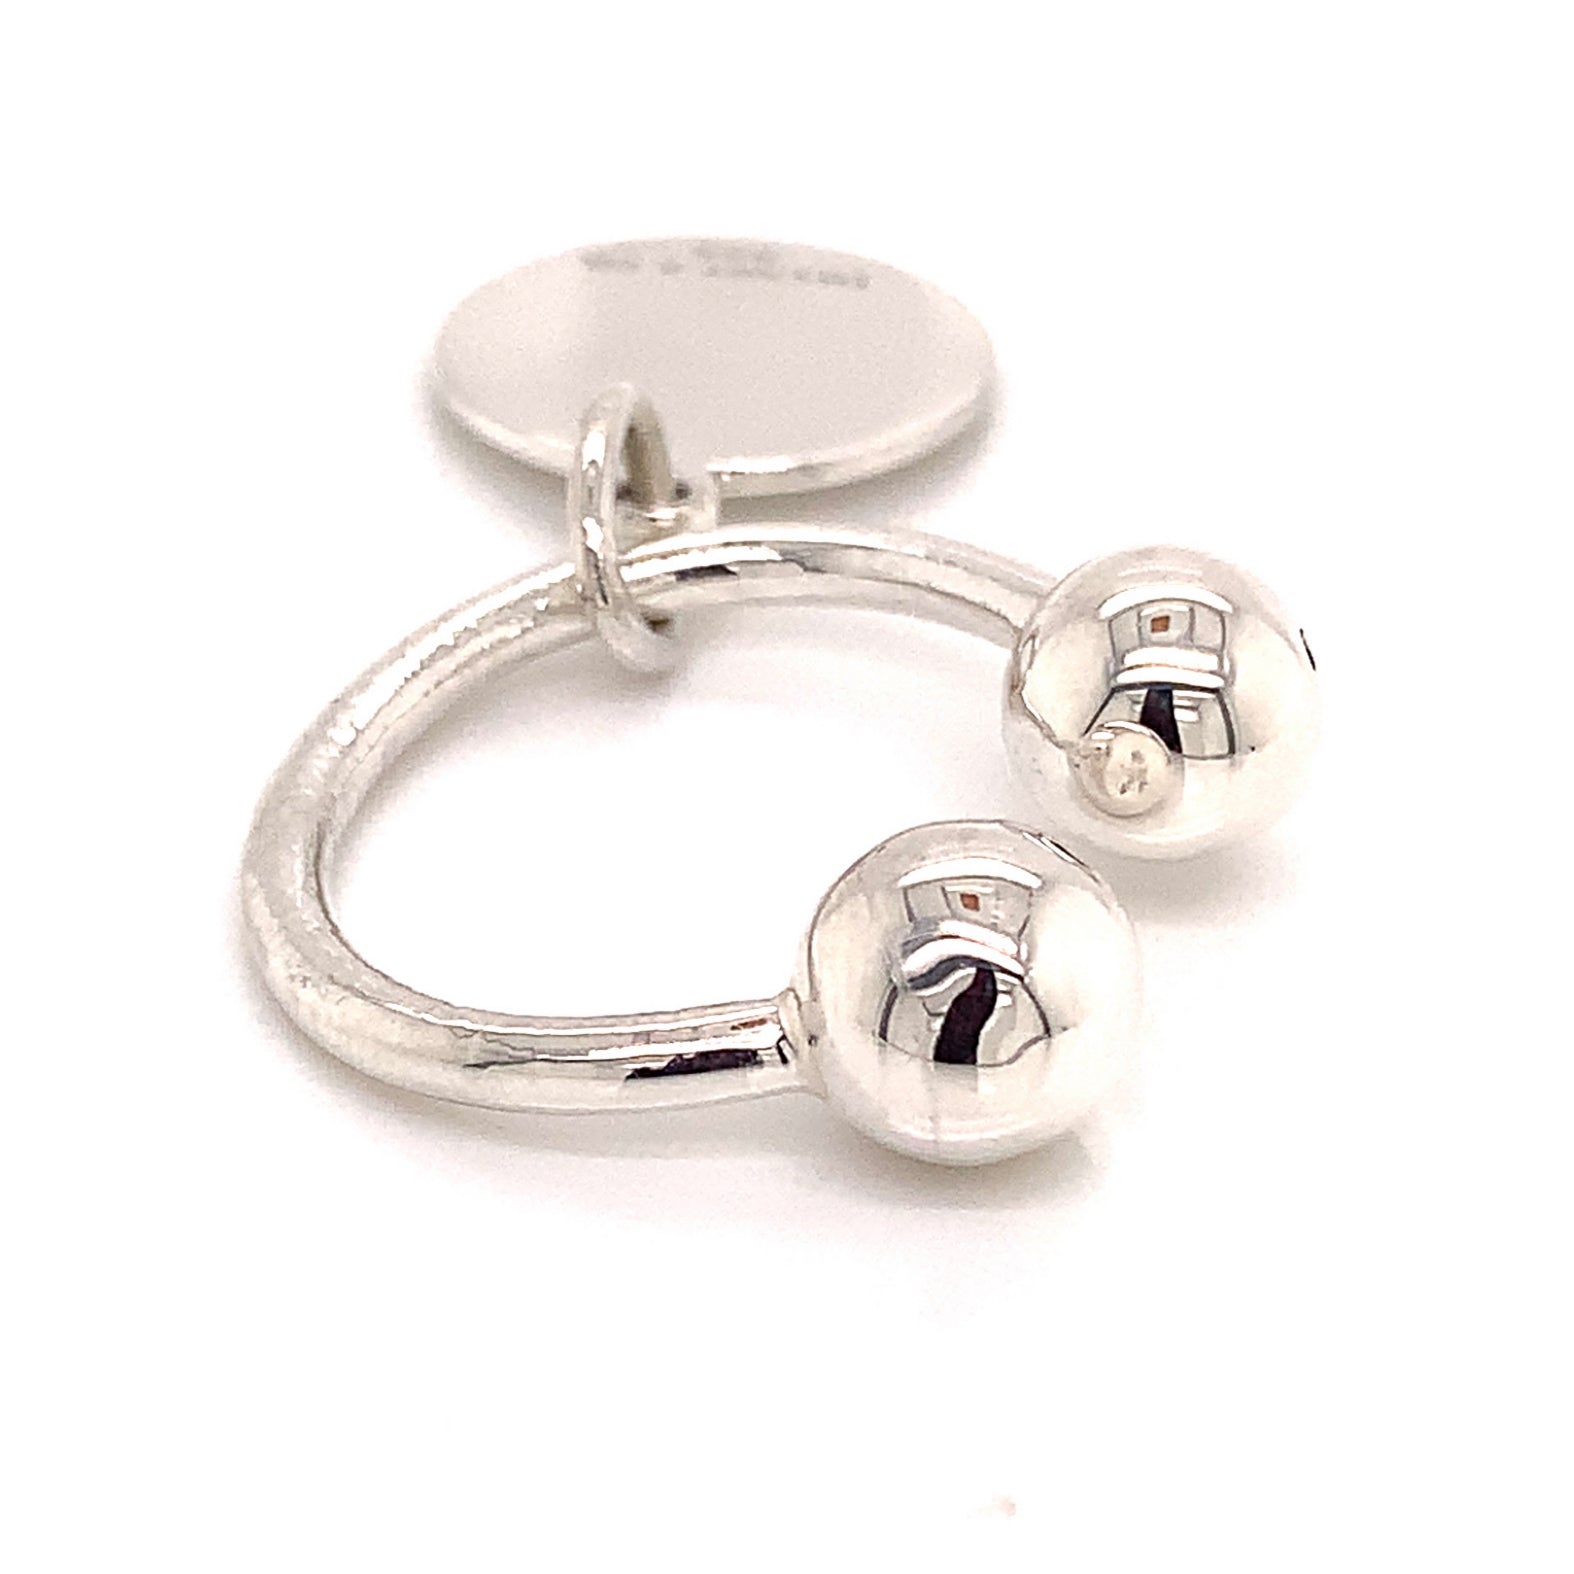 Tiffany & Co Estate Sterling Silver Keychain 9.2 Grams TIF147 - Certified Fine Jewelry